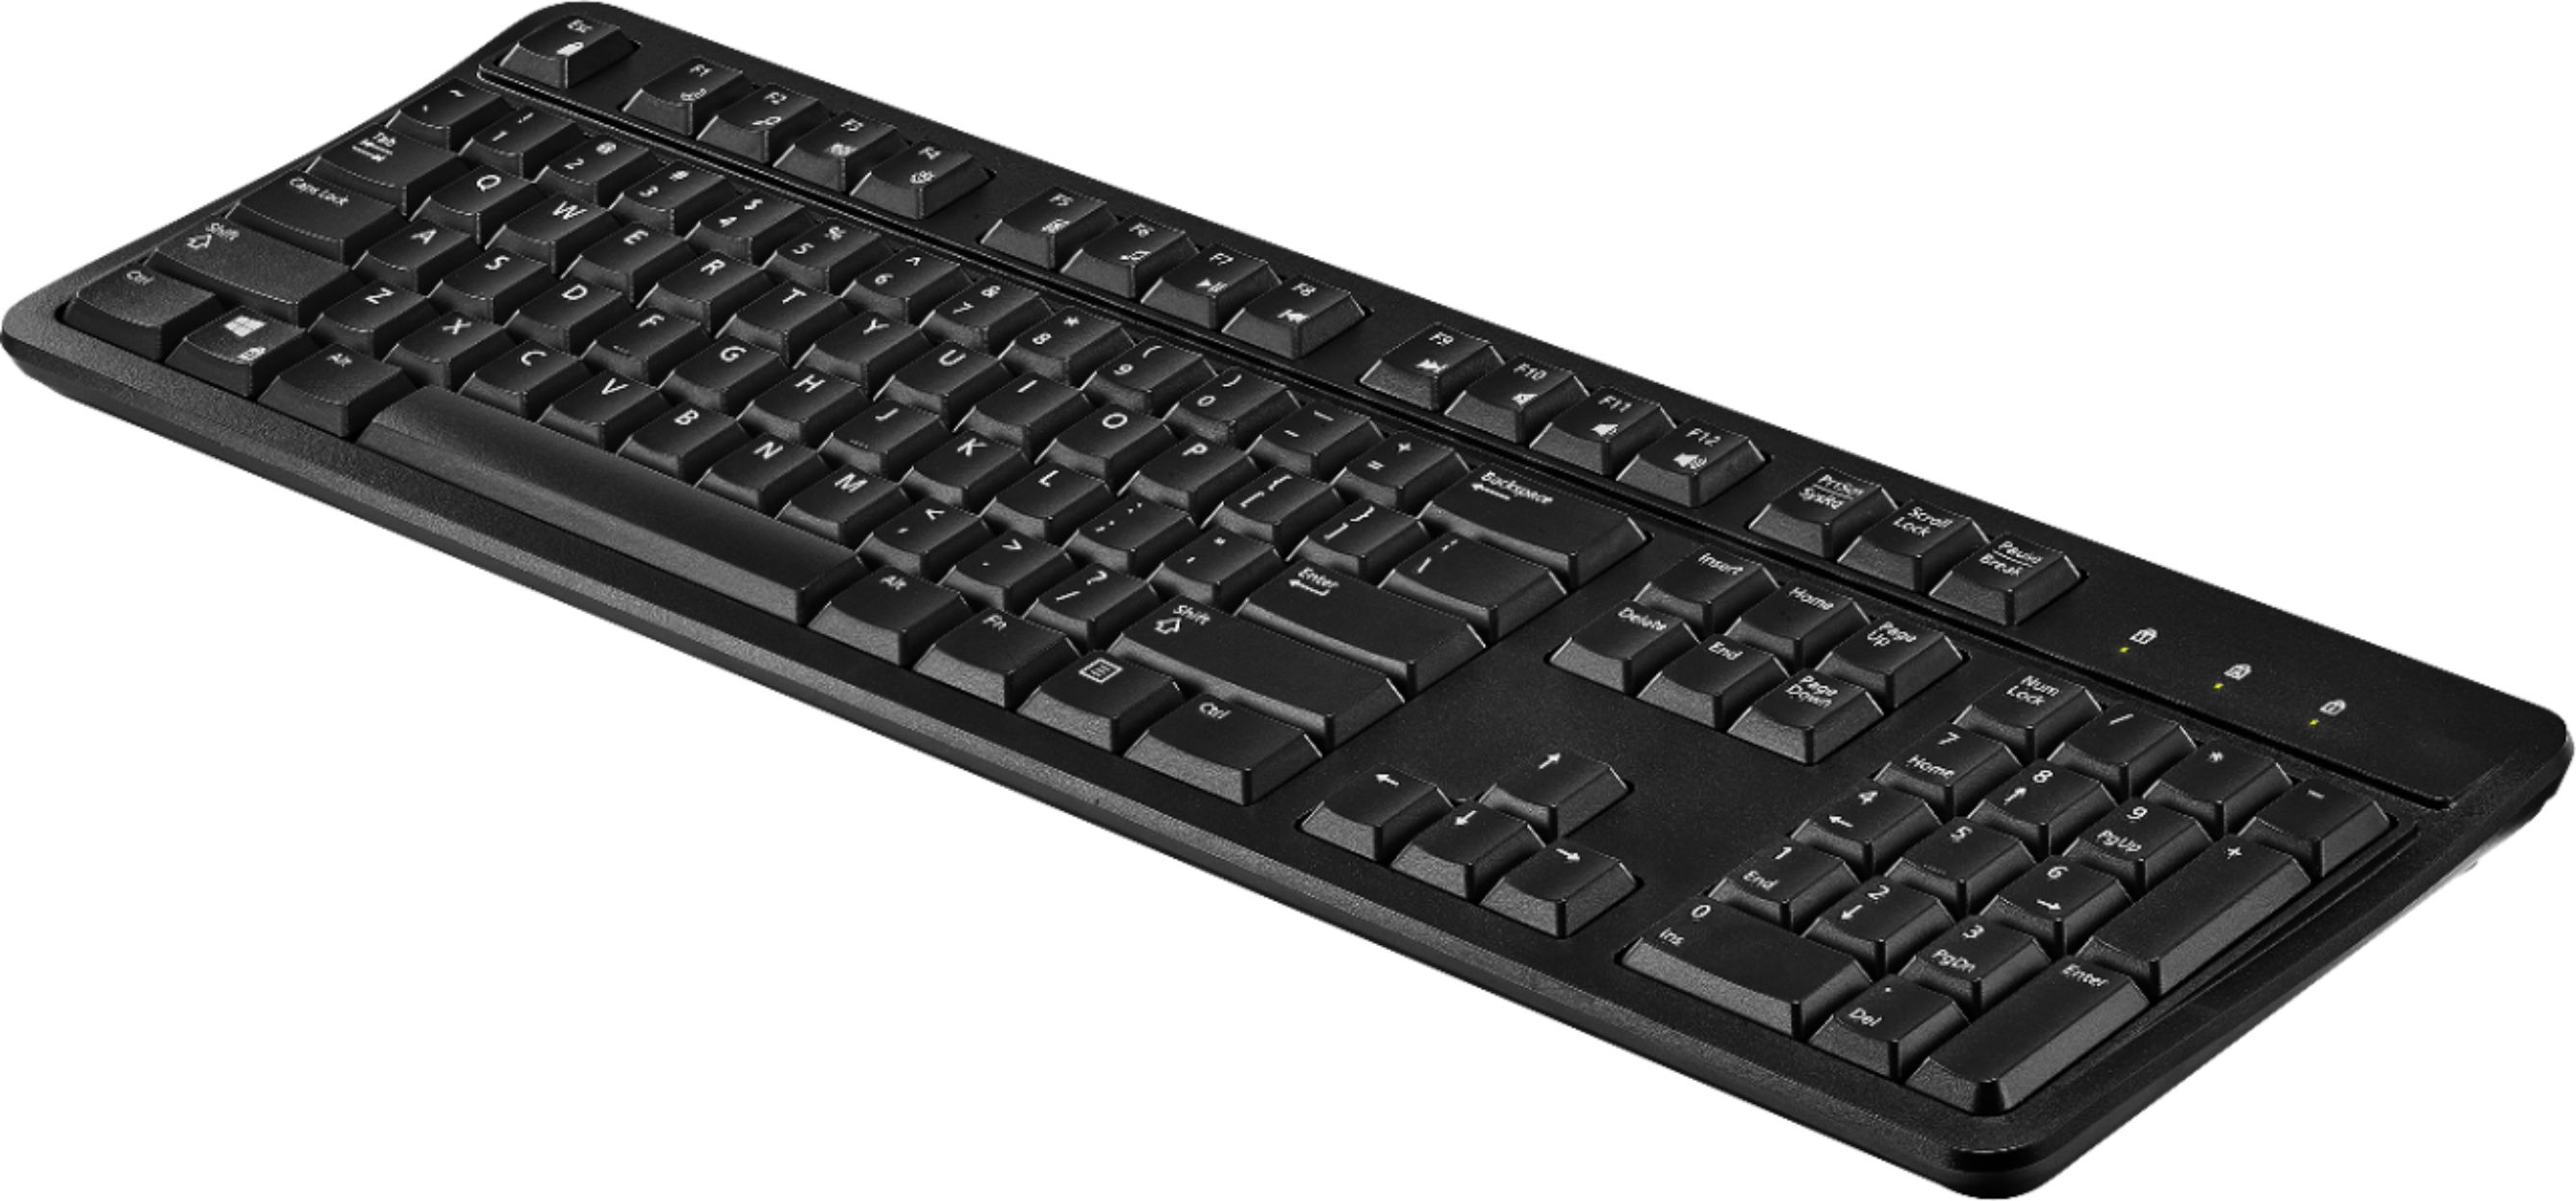 Las mejores ofertas en Unbranded Black Spanish Computer Keyboards & Keypads